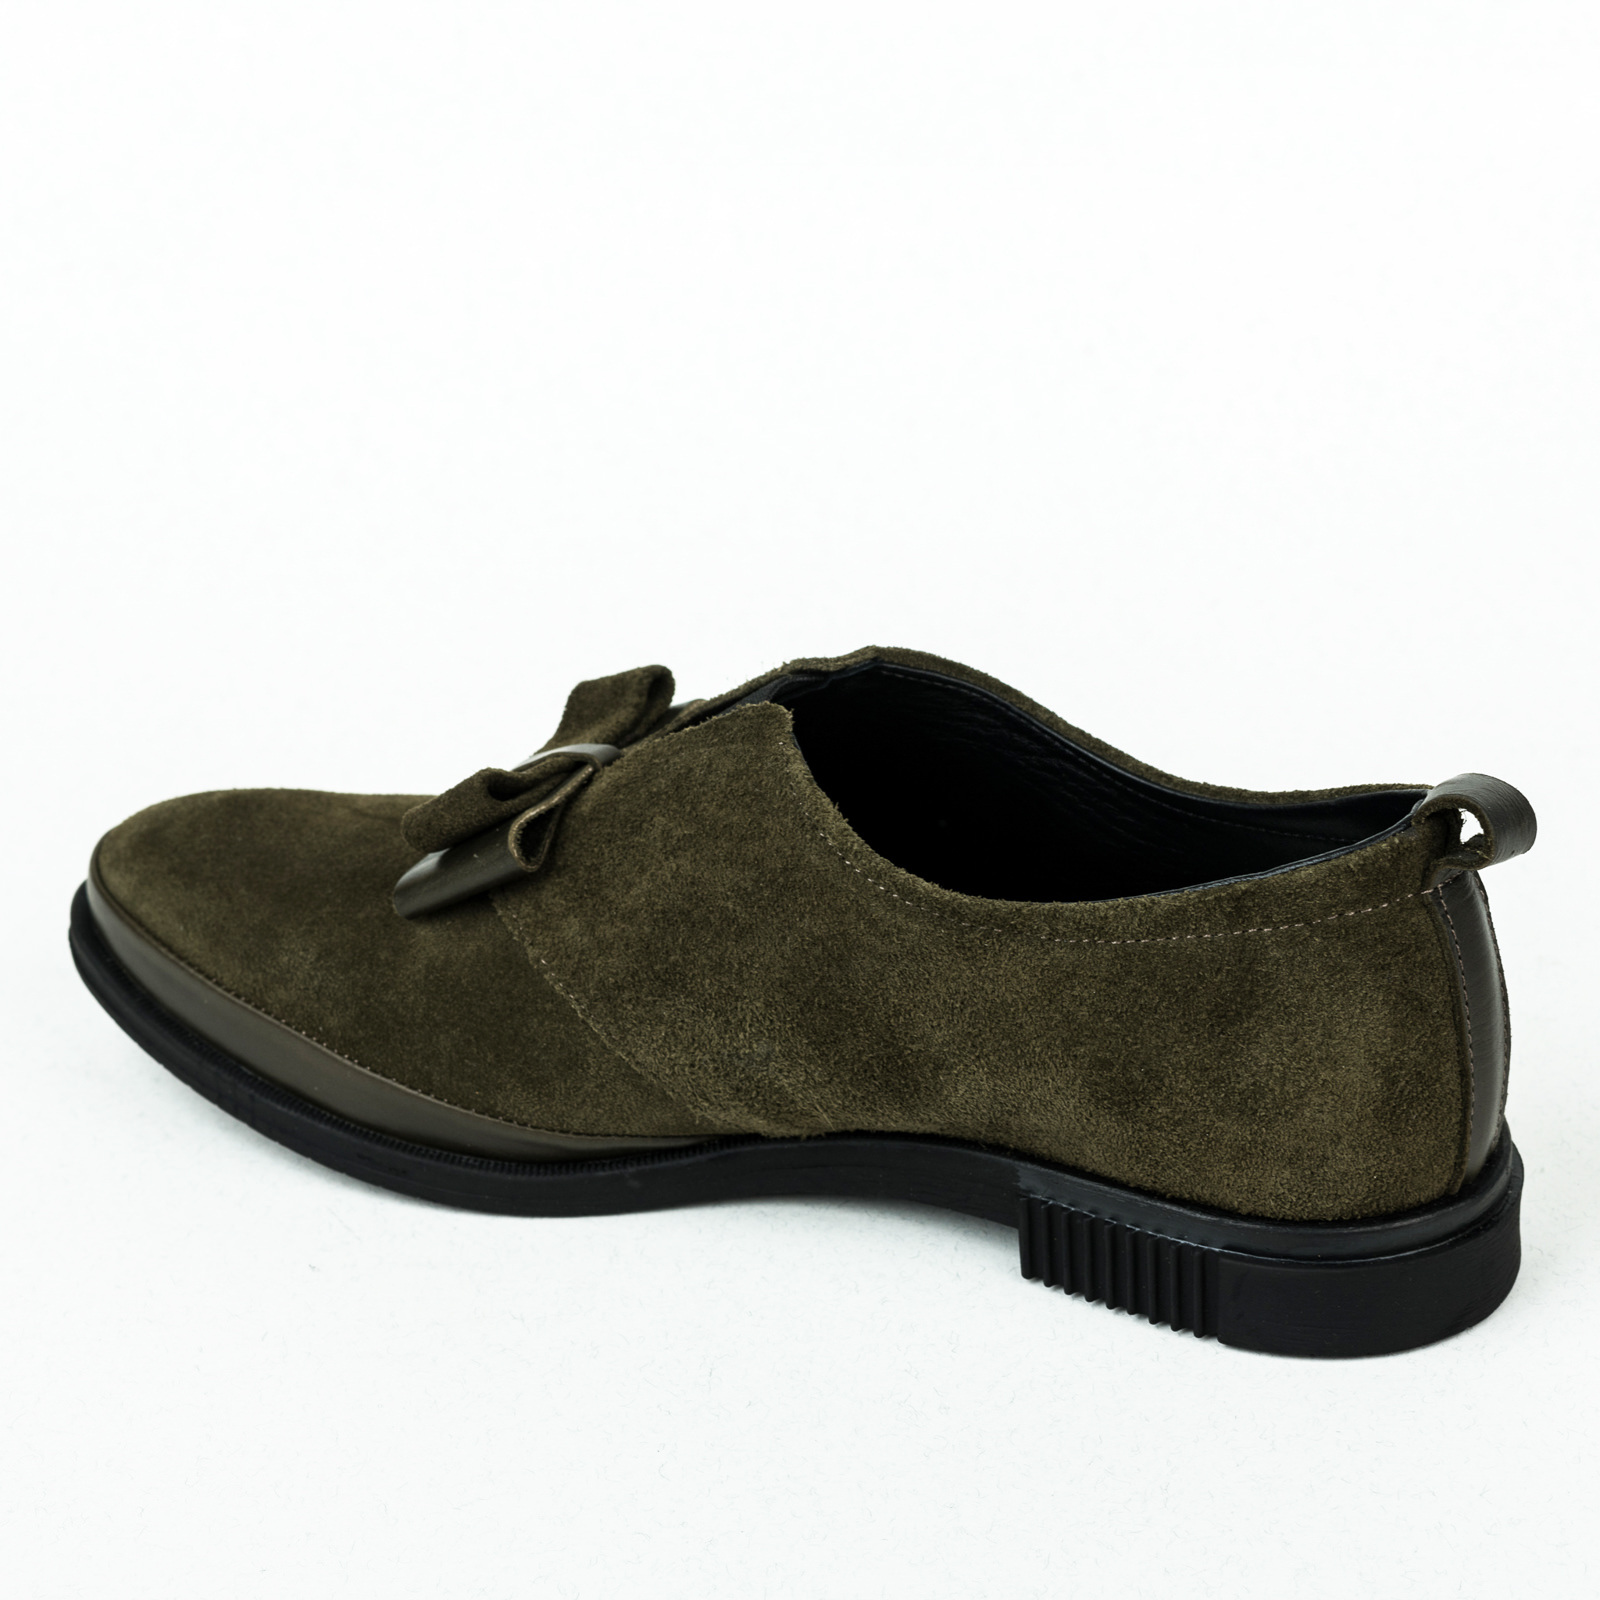 Leather shoes & flats B016 - DARK GREEN